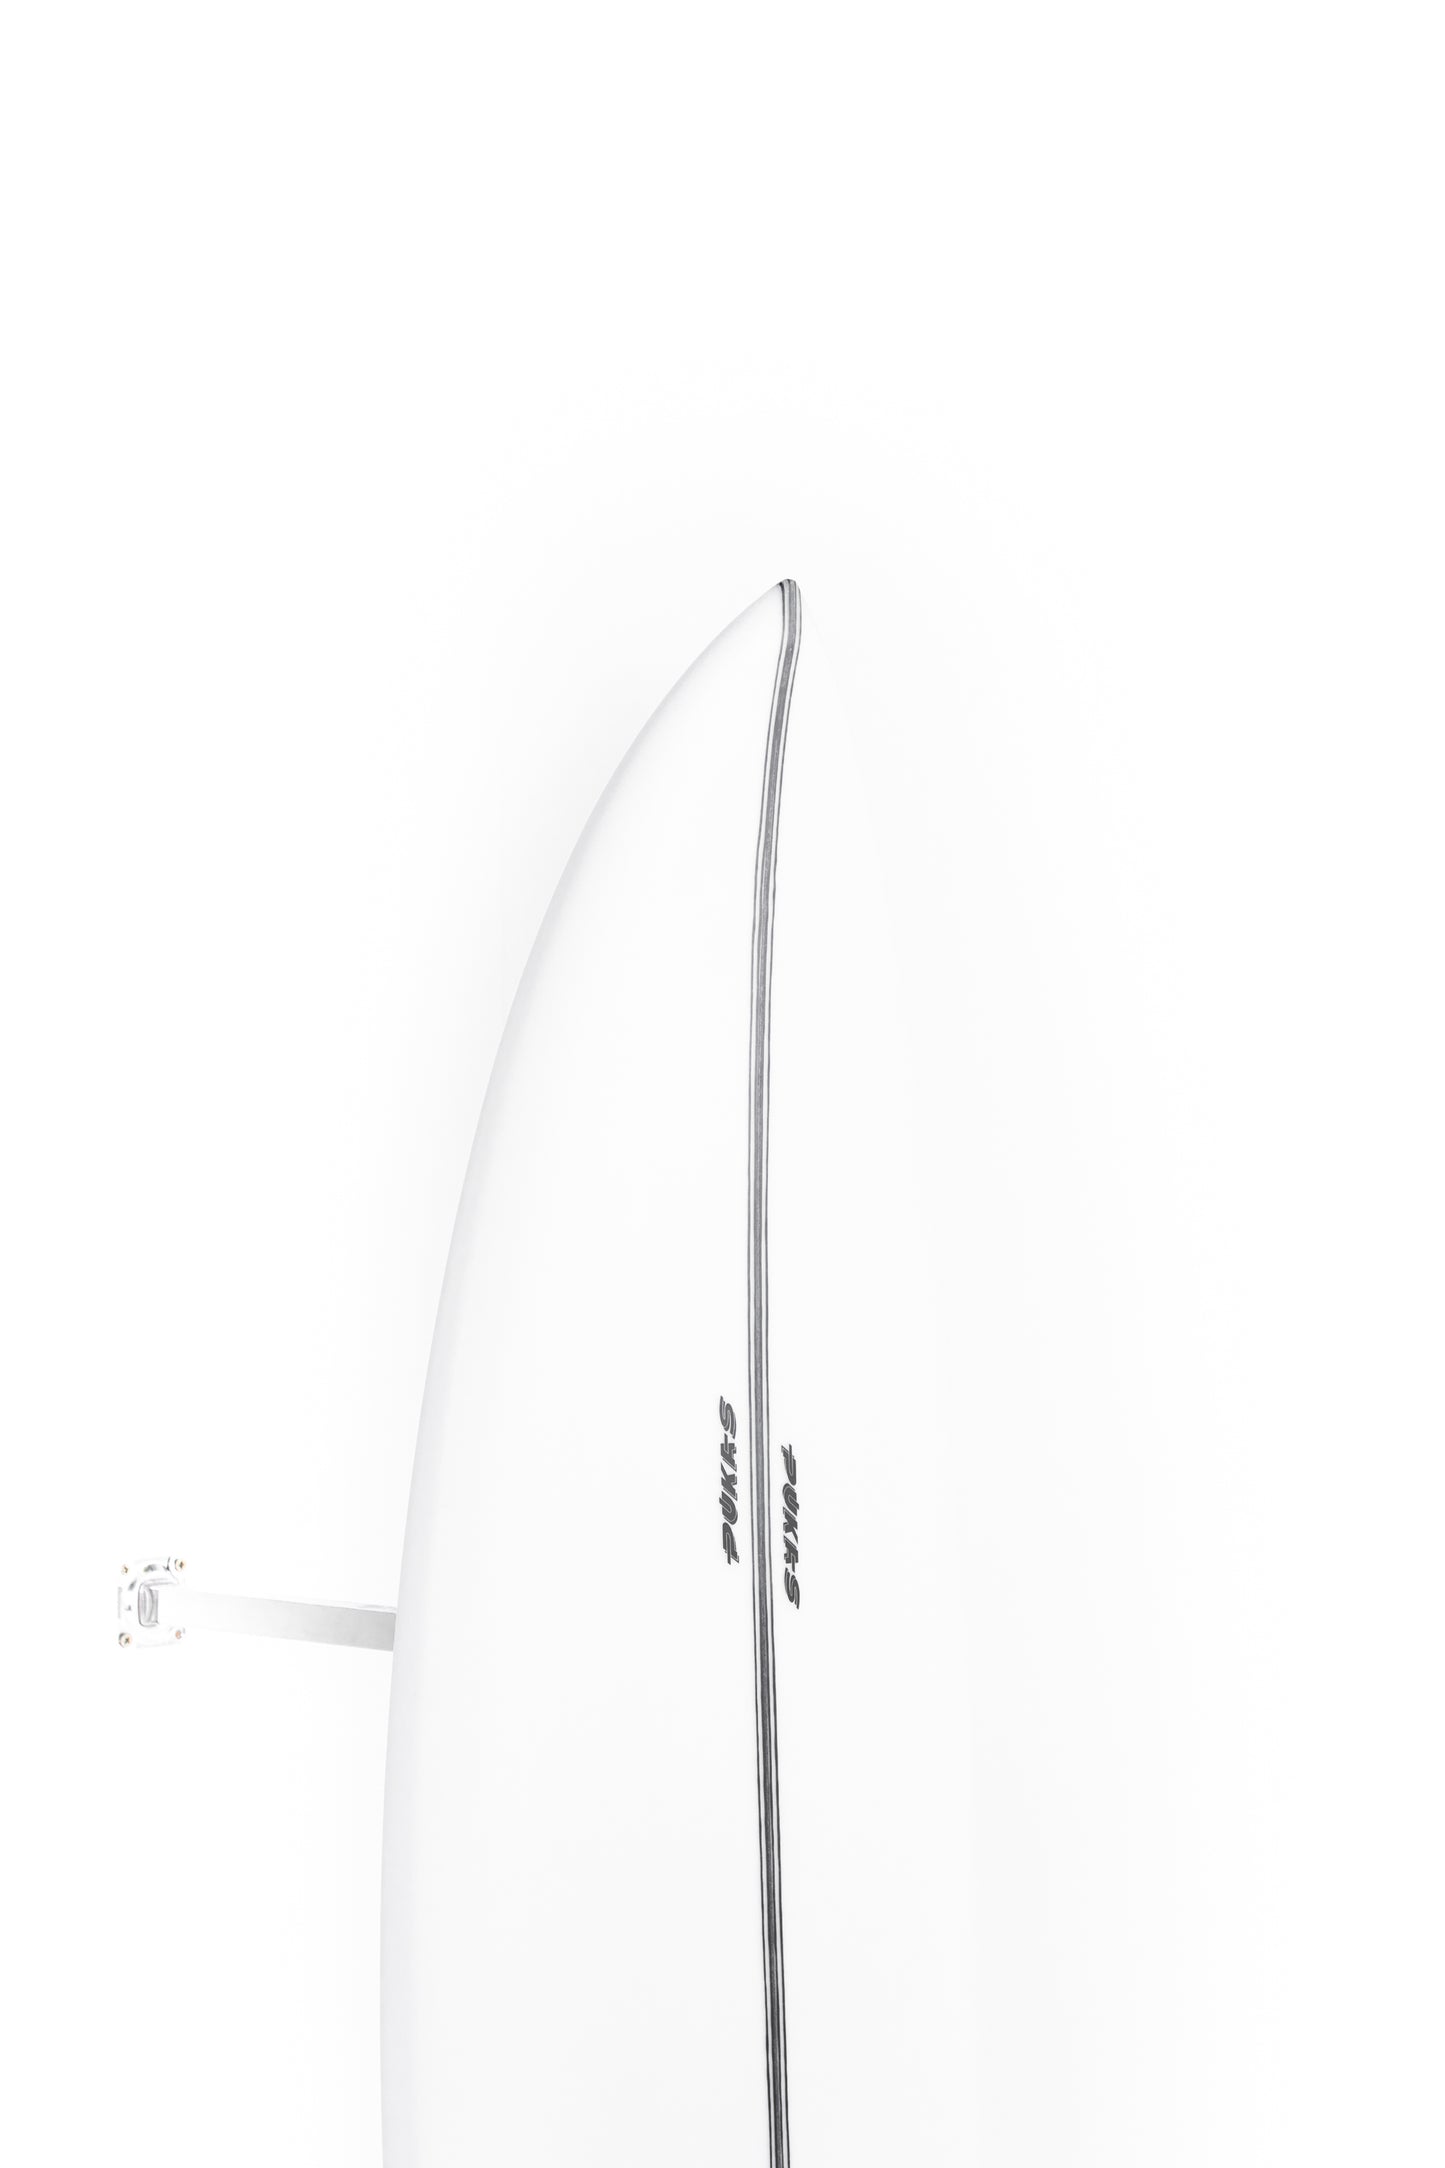 
                  
                    Pukas Surf Shop - Pukas Surfboard - 69ER EVOLUTION by Axel Lorentz- 6’2” x 20,75 x 2.63 - 35,72L - AX10795
                  
                